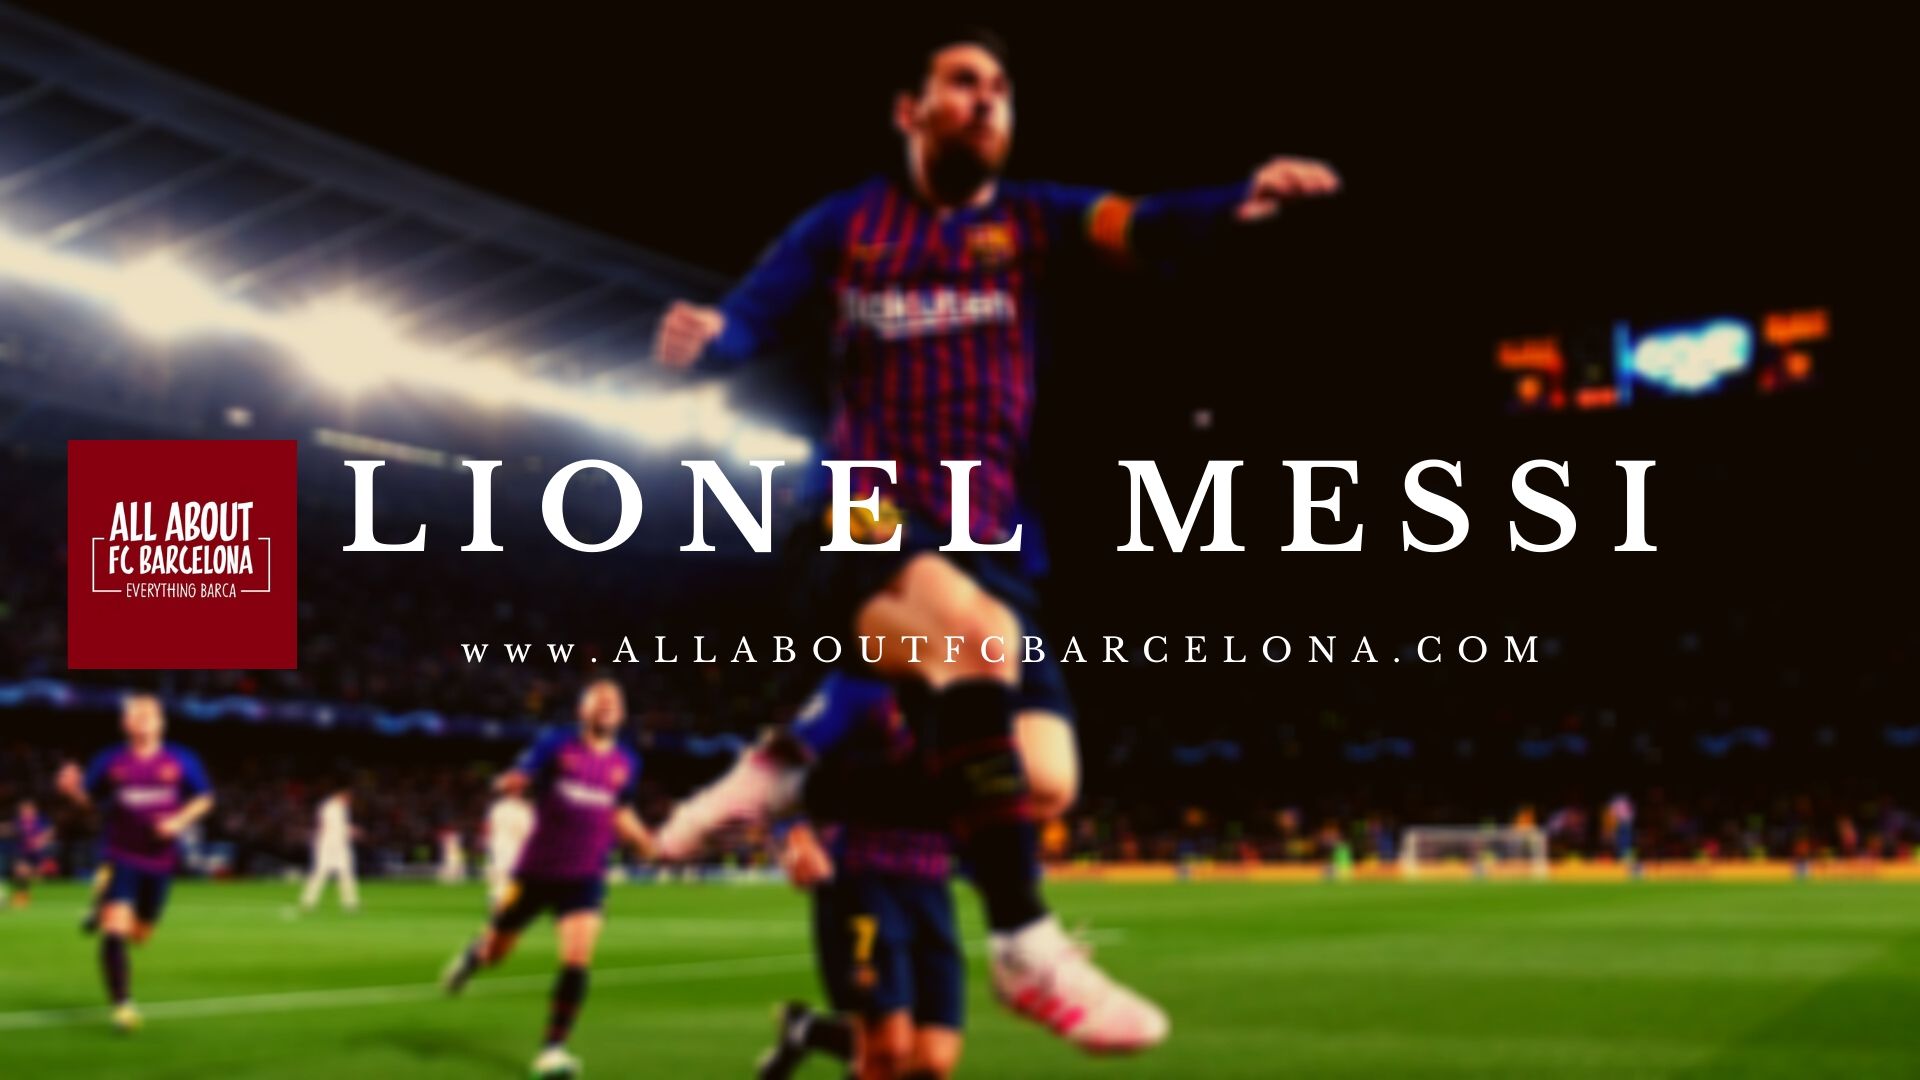 Lionel Messi Gifs against Bayern Munich